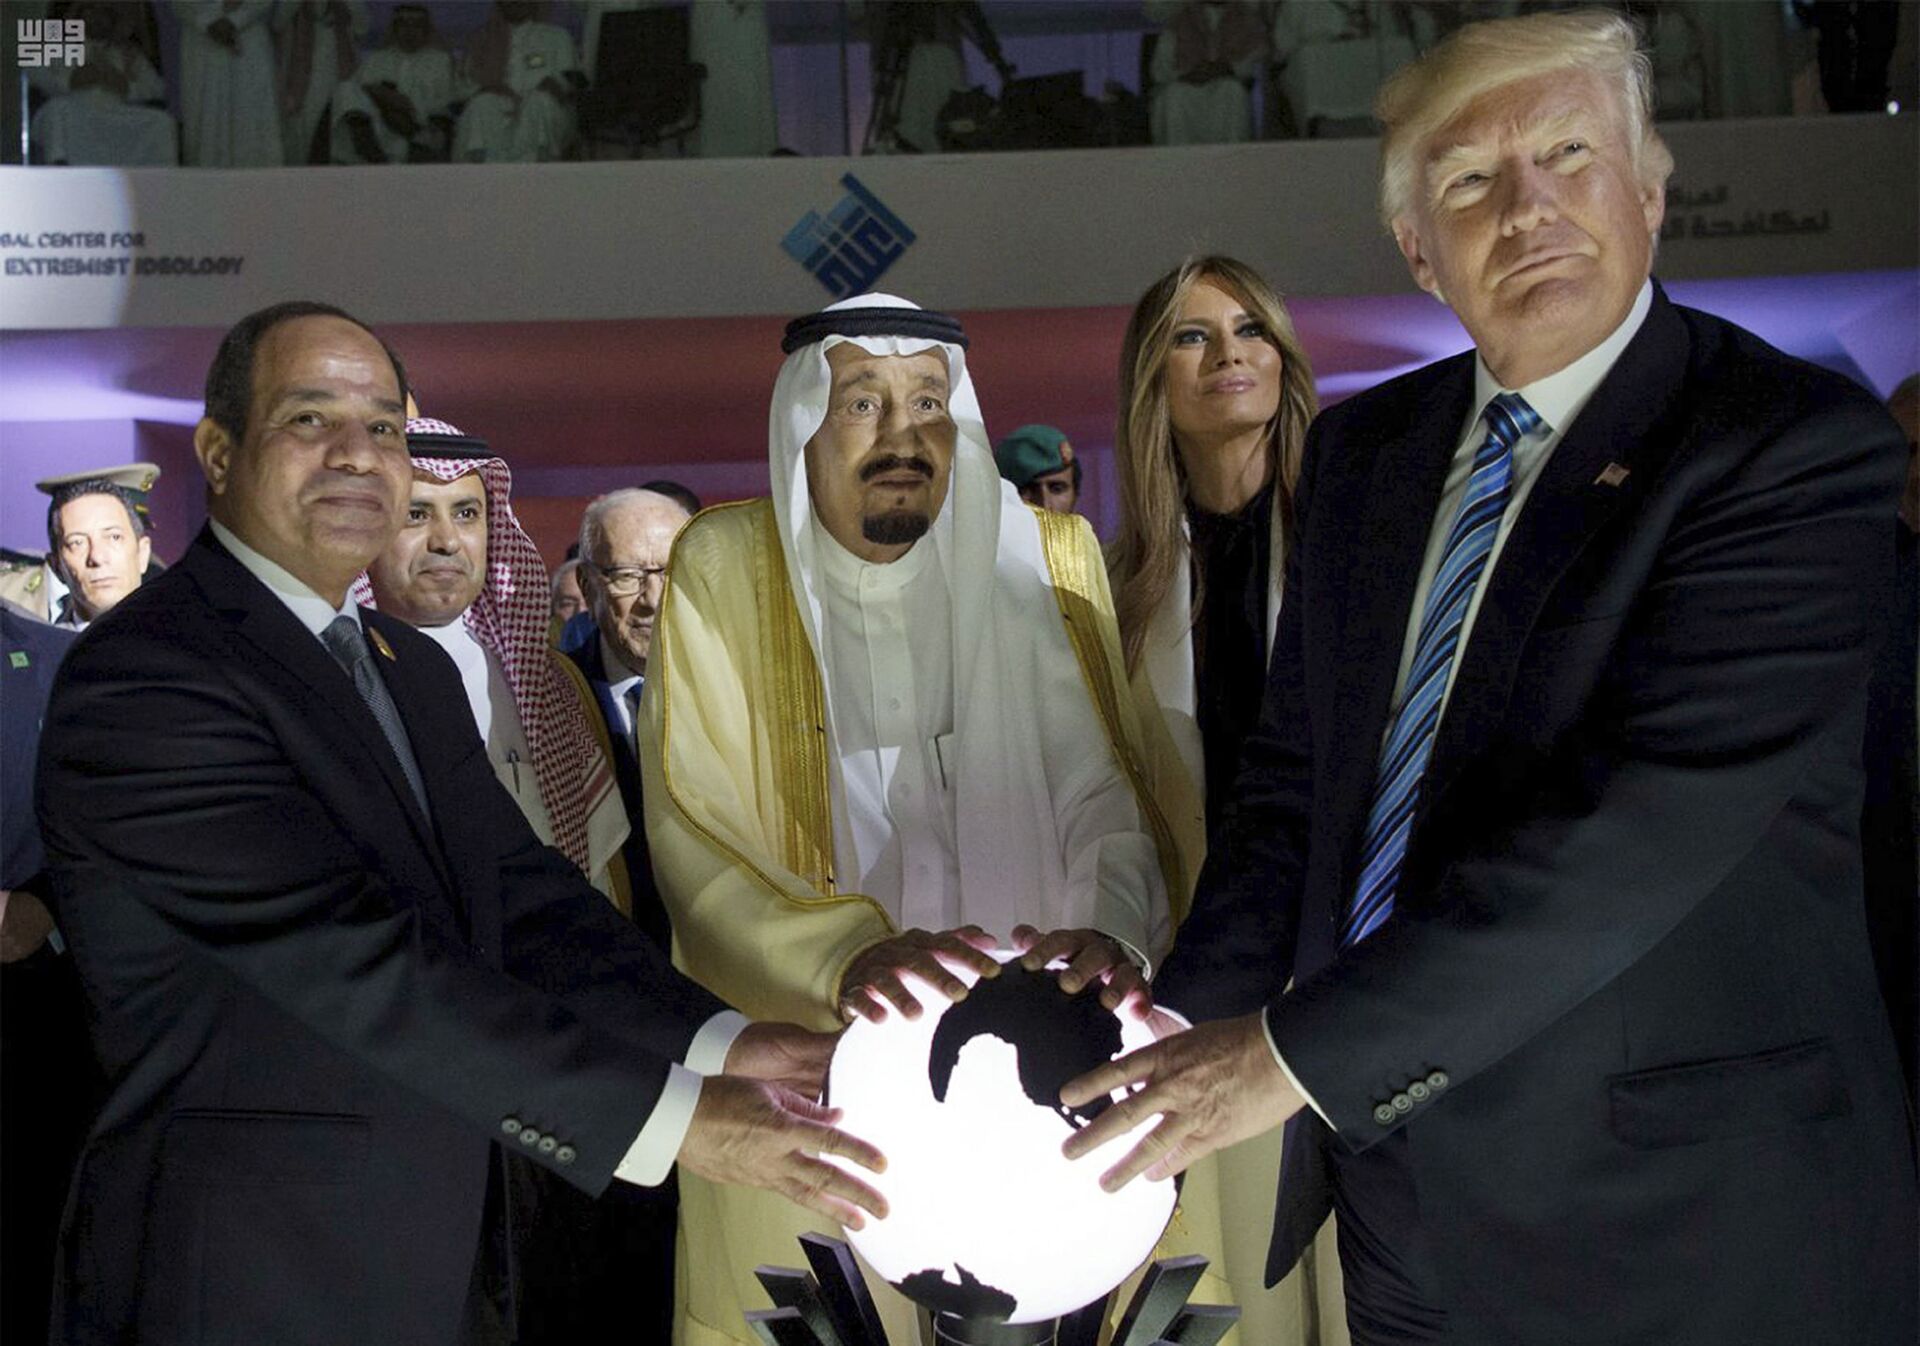 In this image from 21 May 2017, US President Donald Trump, Egyptian President Abdel Fattah el-Sisi, and Saudi King Salman, grasp an orb during a forum in Riyadh. - Sputnik International, 1920, 12.10.2021